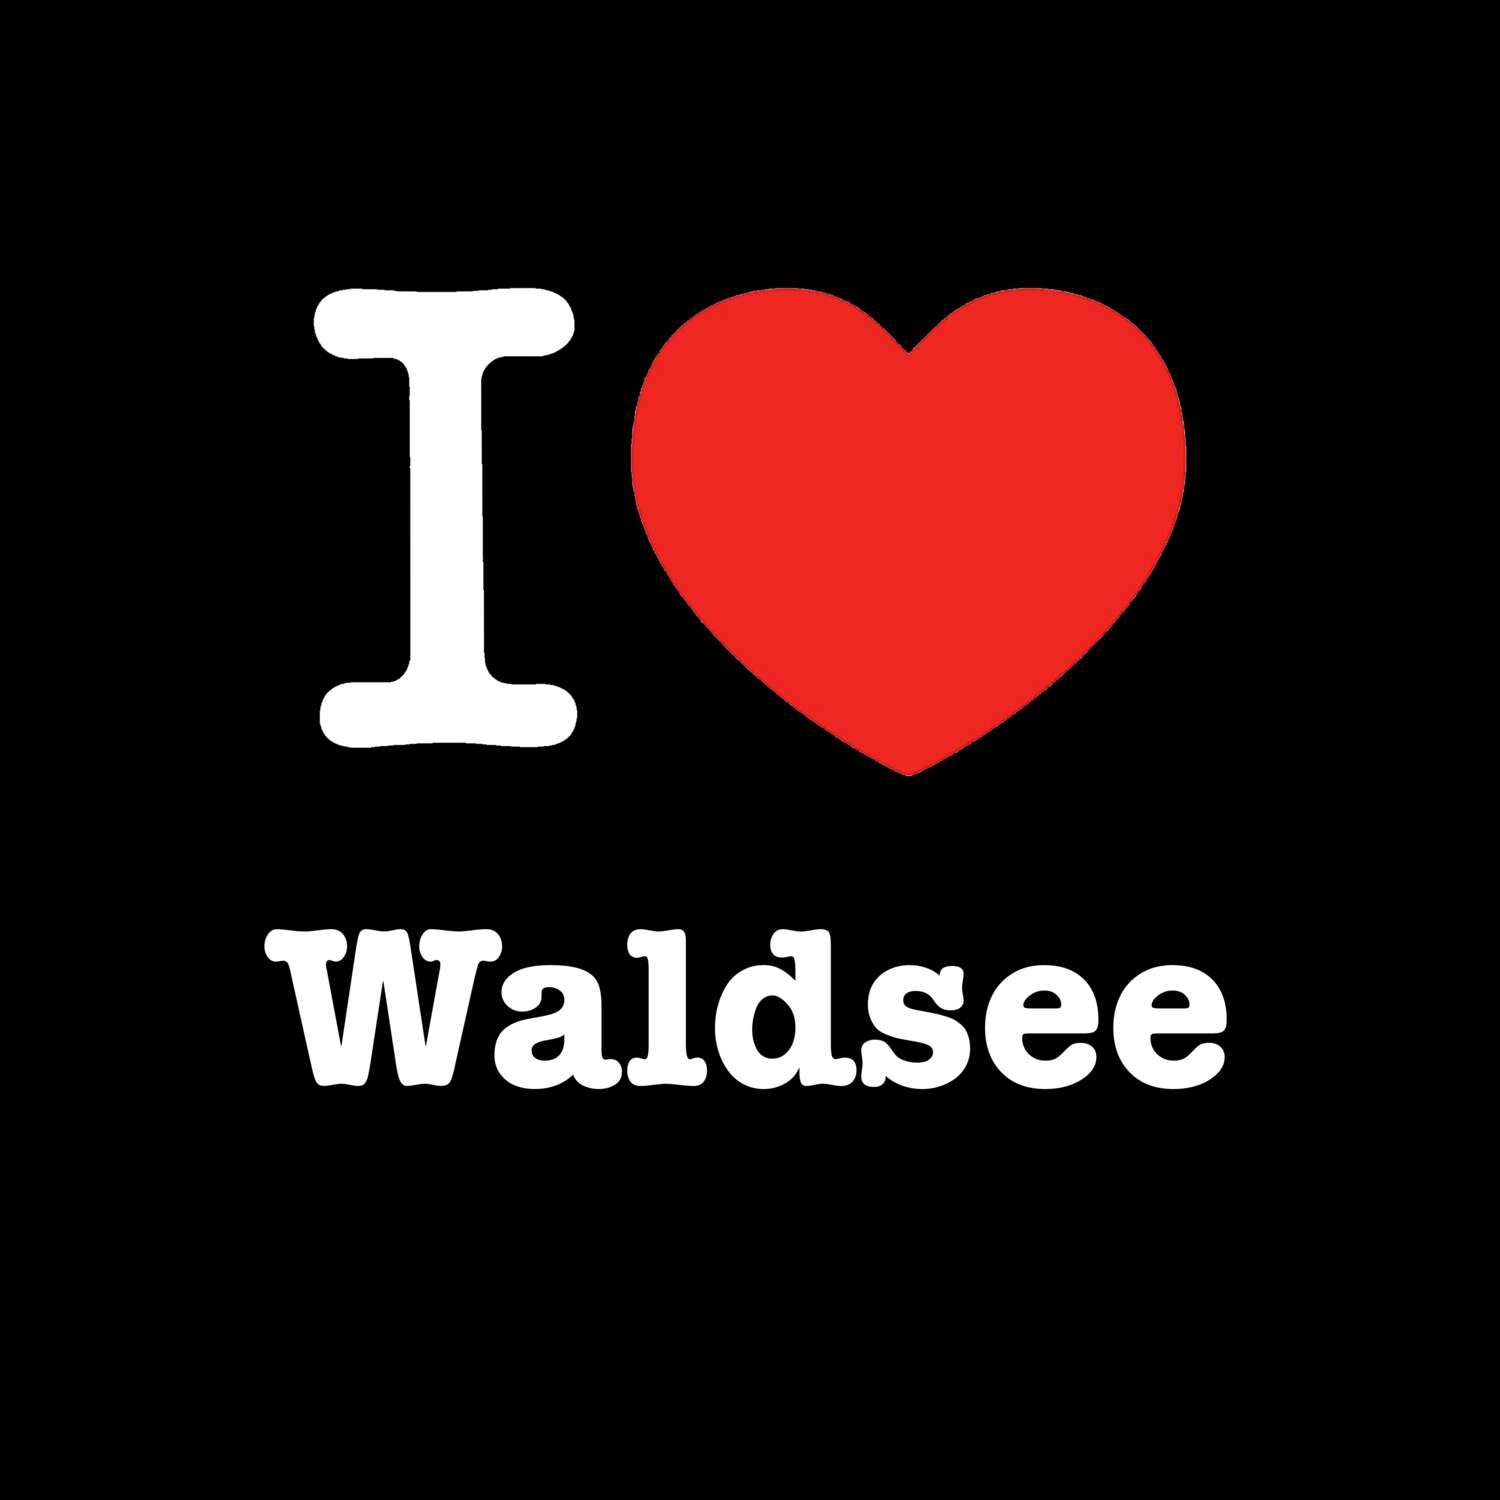 Waldsee T-Shirt »I love«